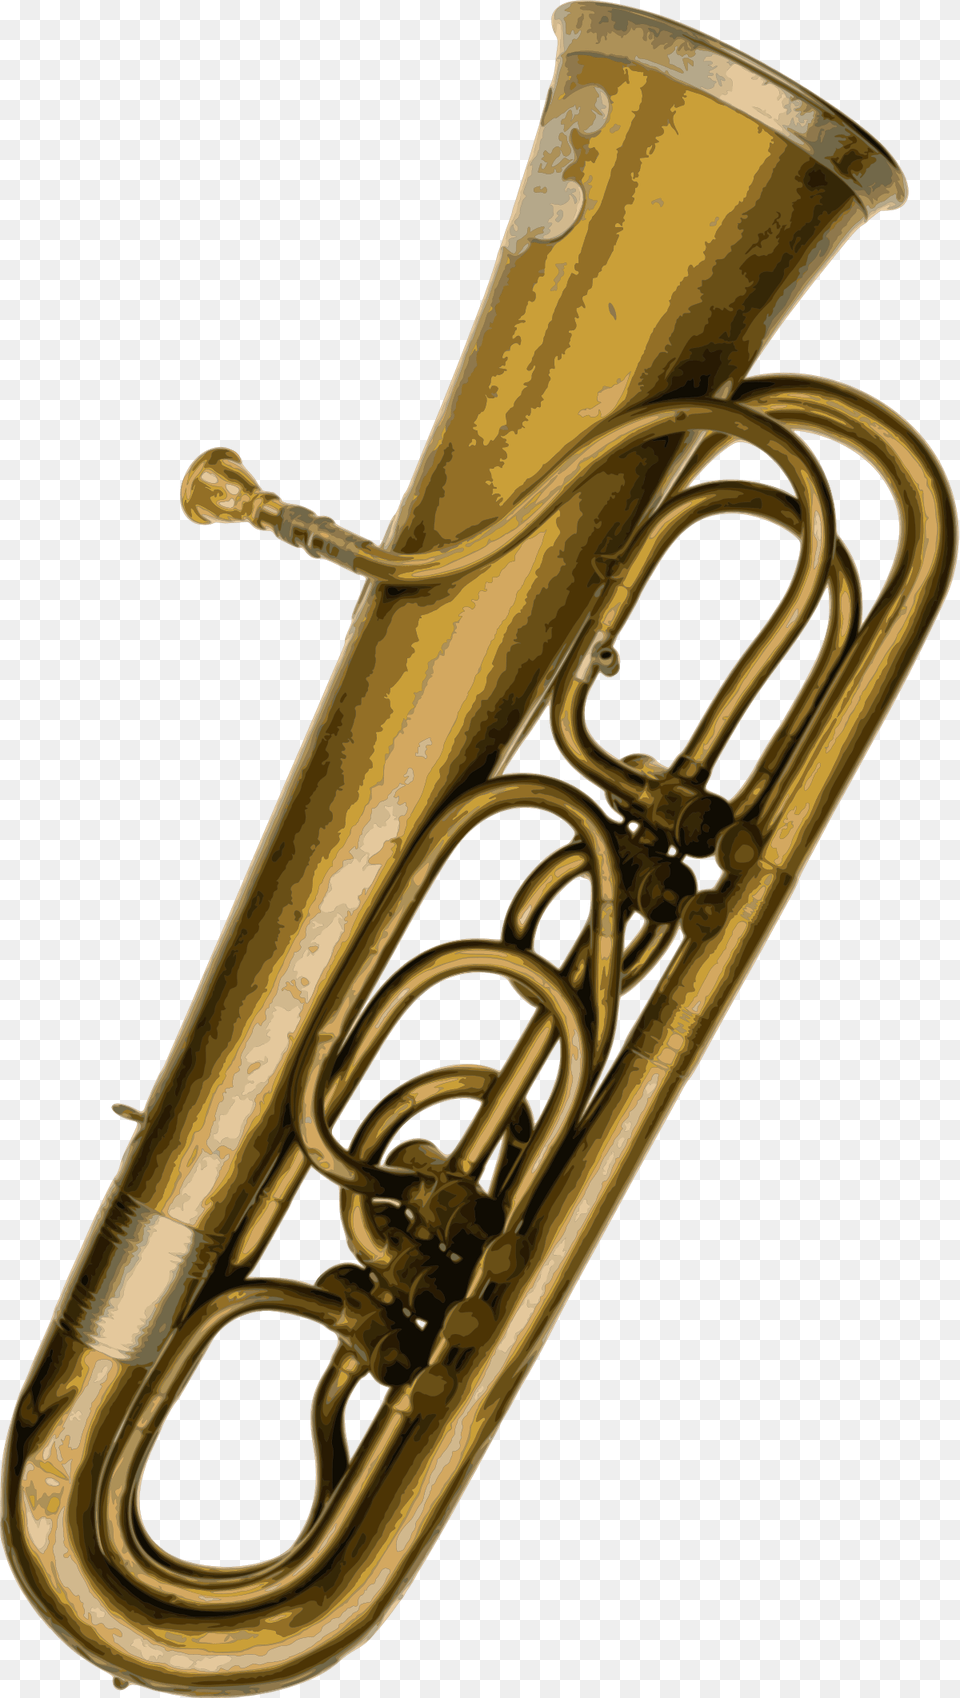 Filetuba Vectorizedsvg Ancient Music Instruments Tuba Tuba, Brass Section, Horn, Musical Instrument, Flugelhorn Free Png